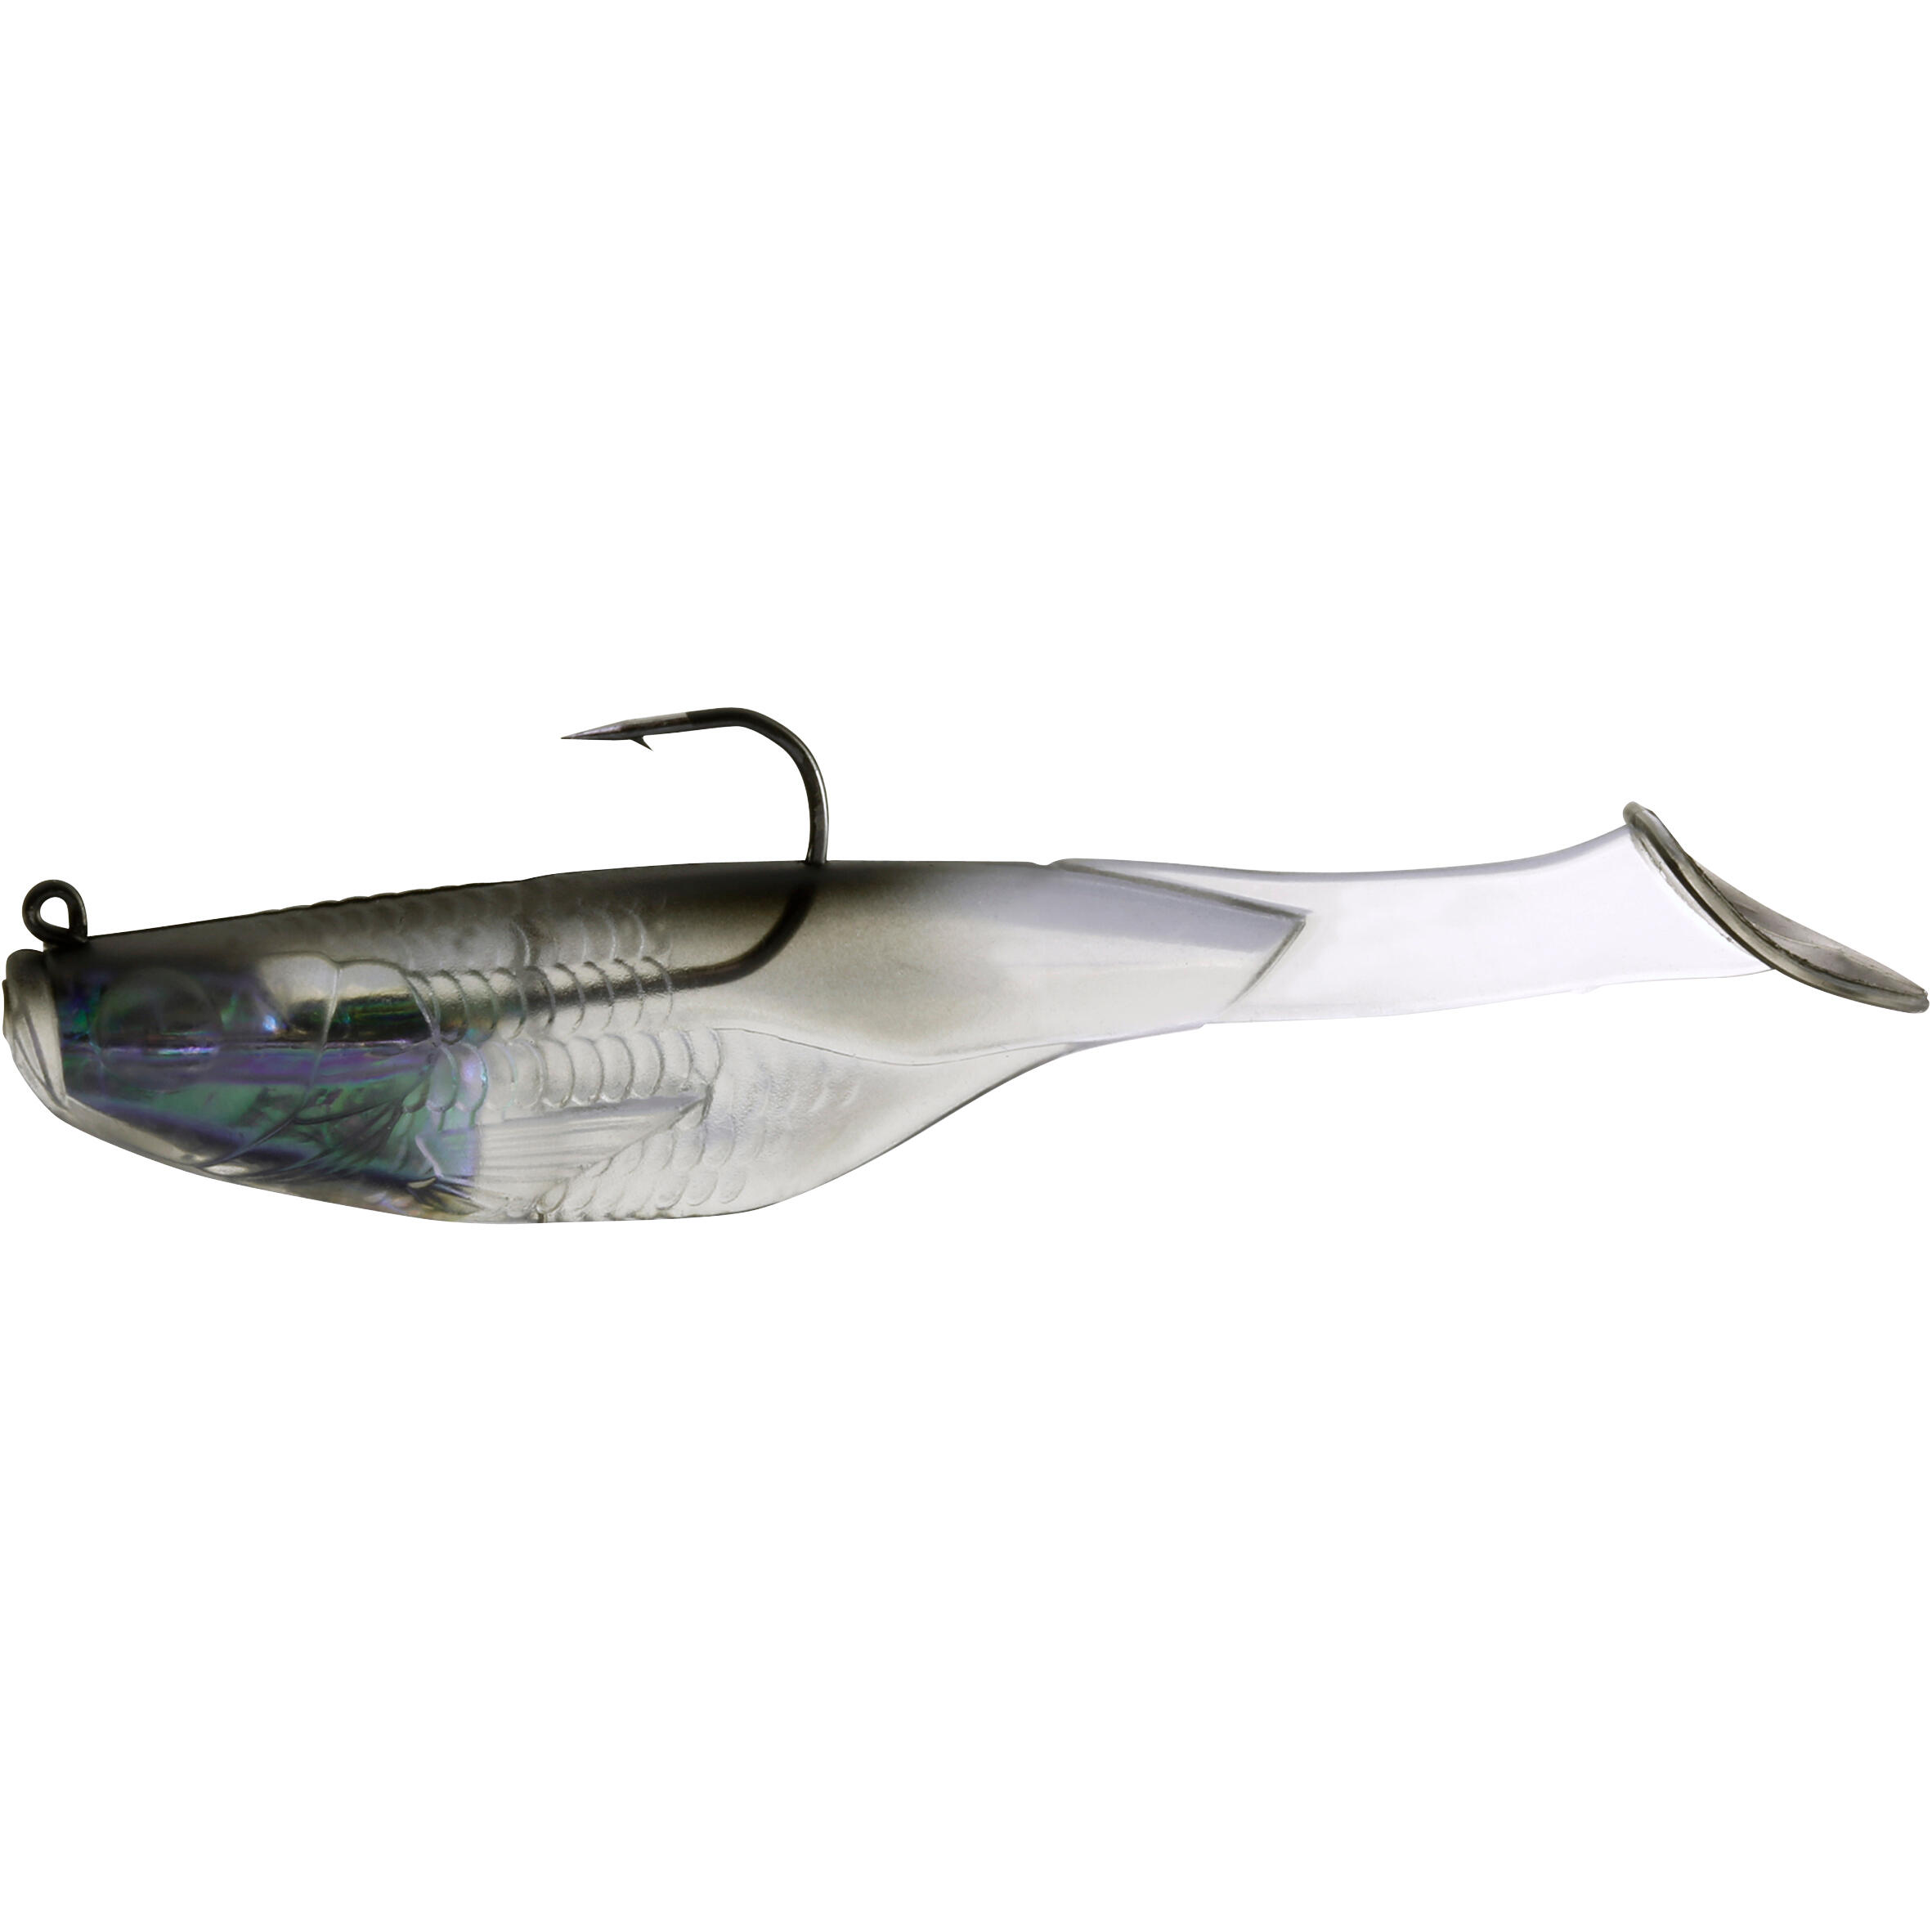 Caperlan By Decathlon Ledgering Combo Resifight 100 Ldg 2.20 8577299 Multicolor Fishing Rod